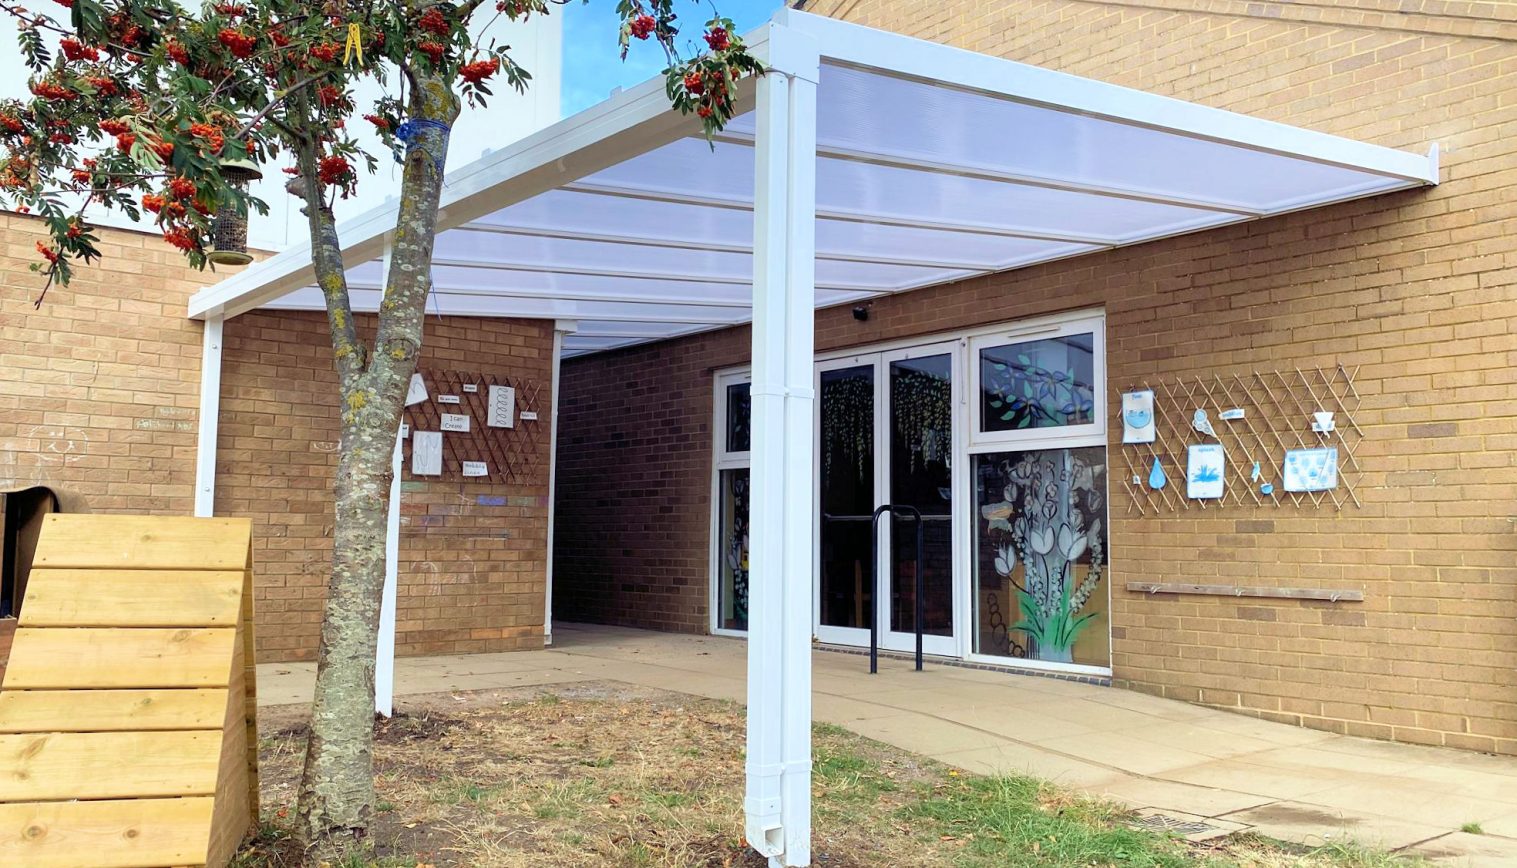 Alderman Jacobs Primary School – Wall Mounted Canopies